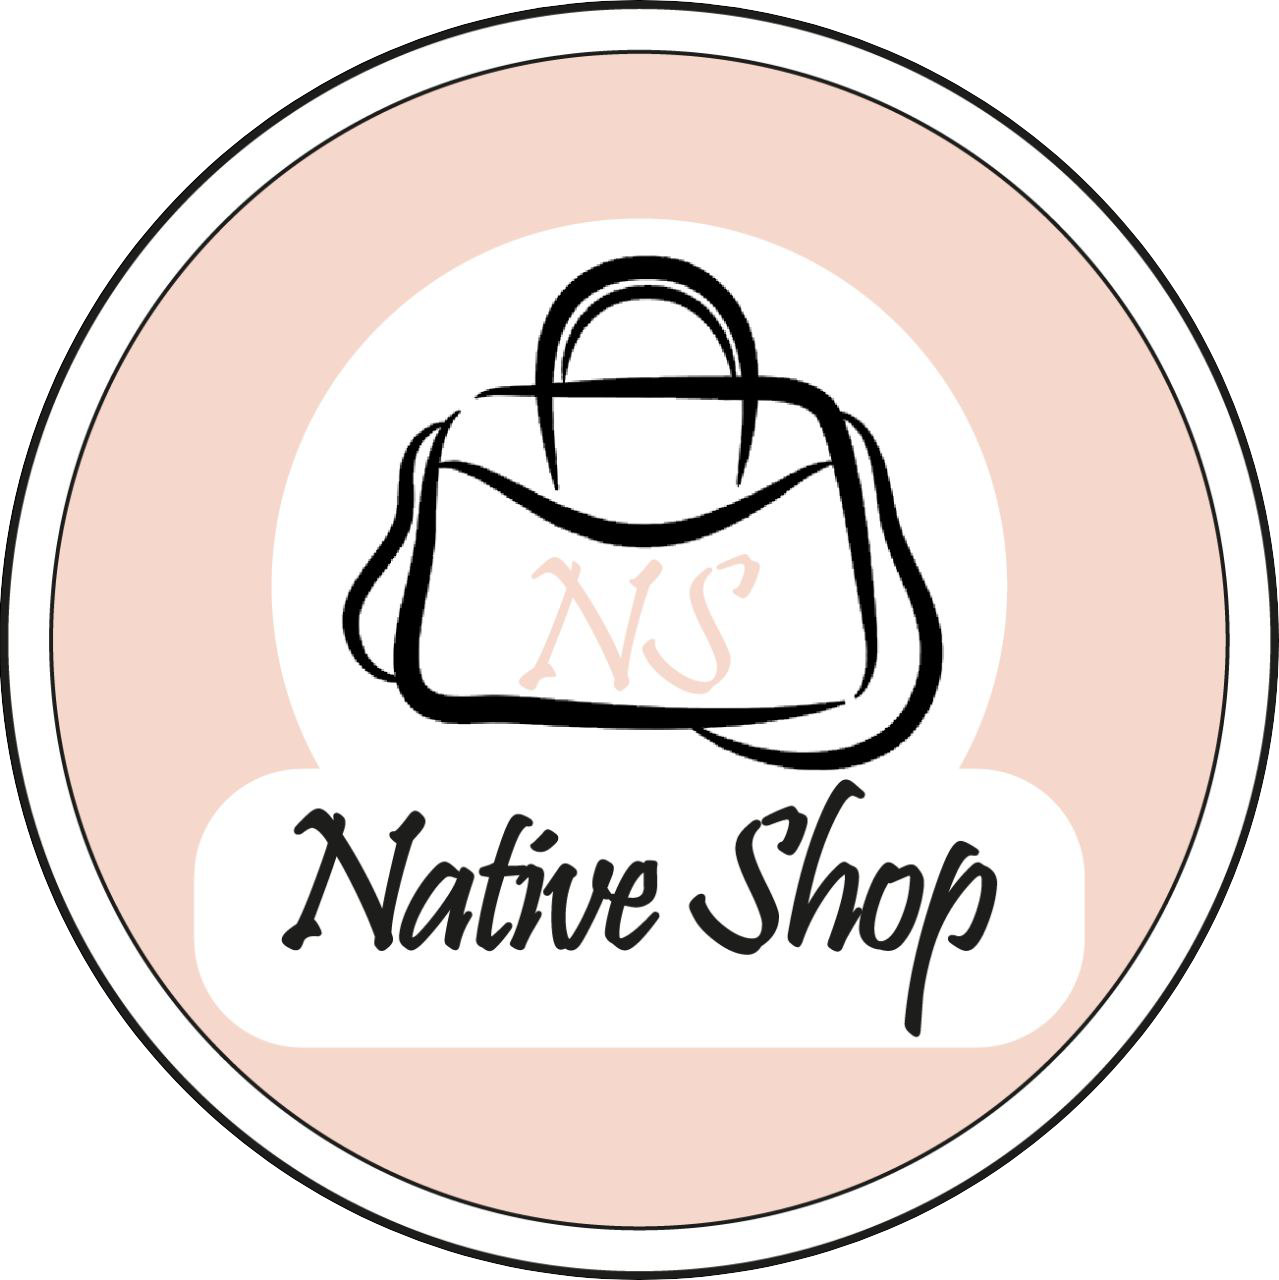 Native shop